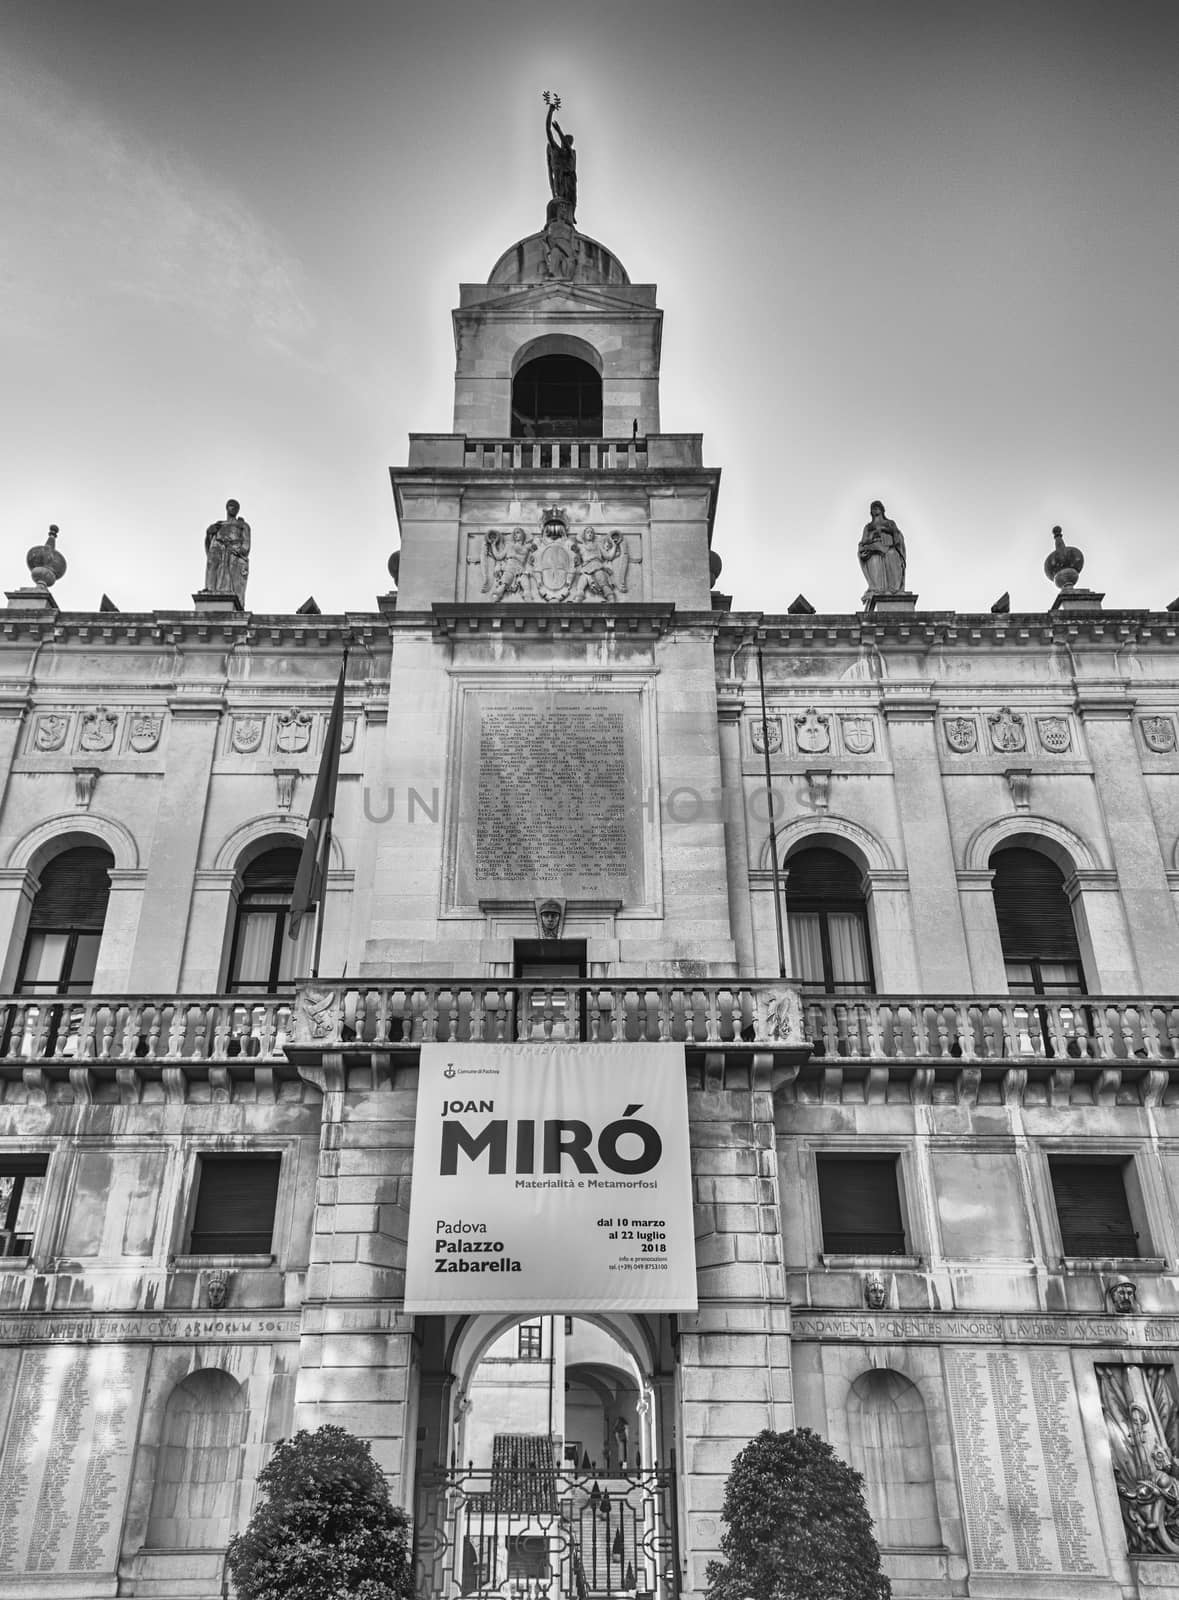 PADUA, ITALY - APRIL 28: Facade of the City Hall, iconic building in the city center of Padua, Italy, April 28, 2018